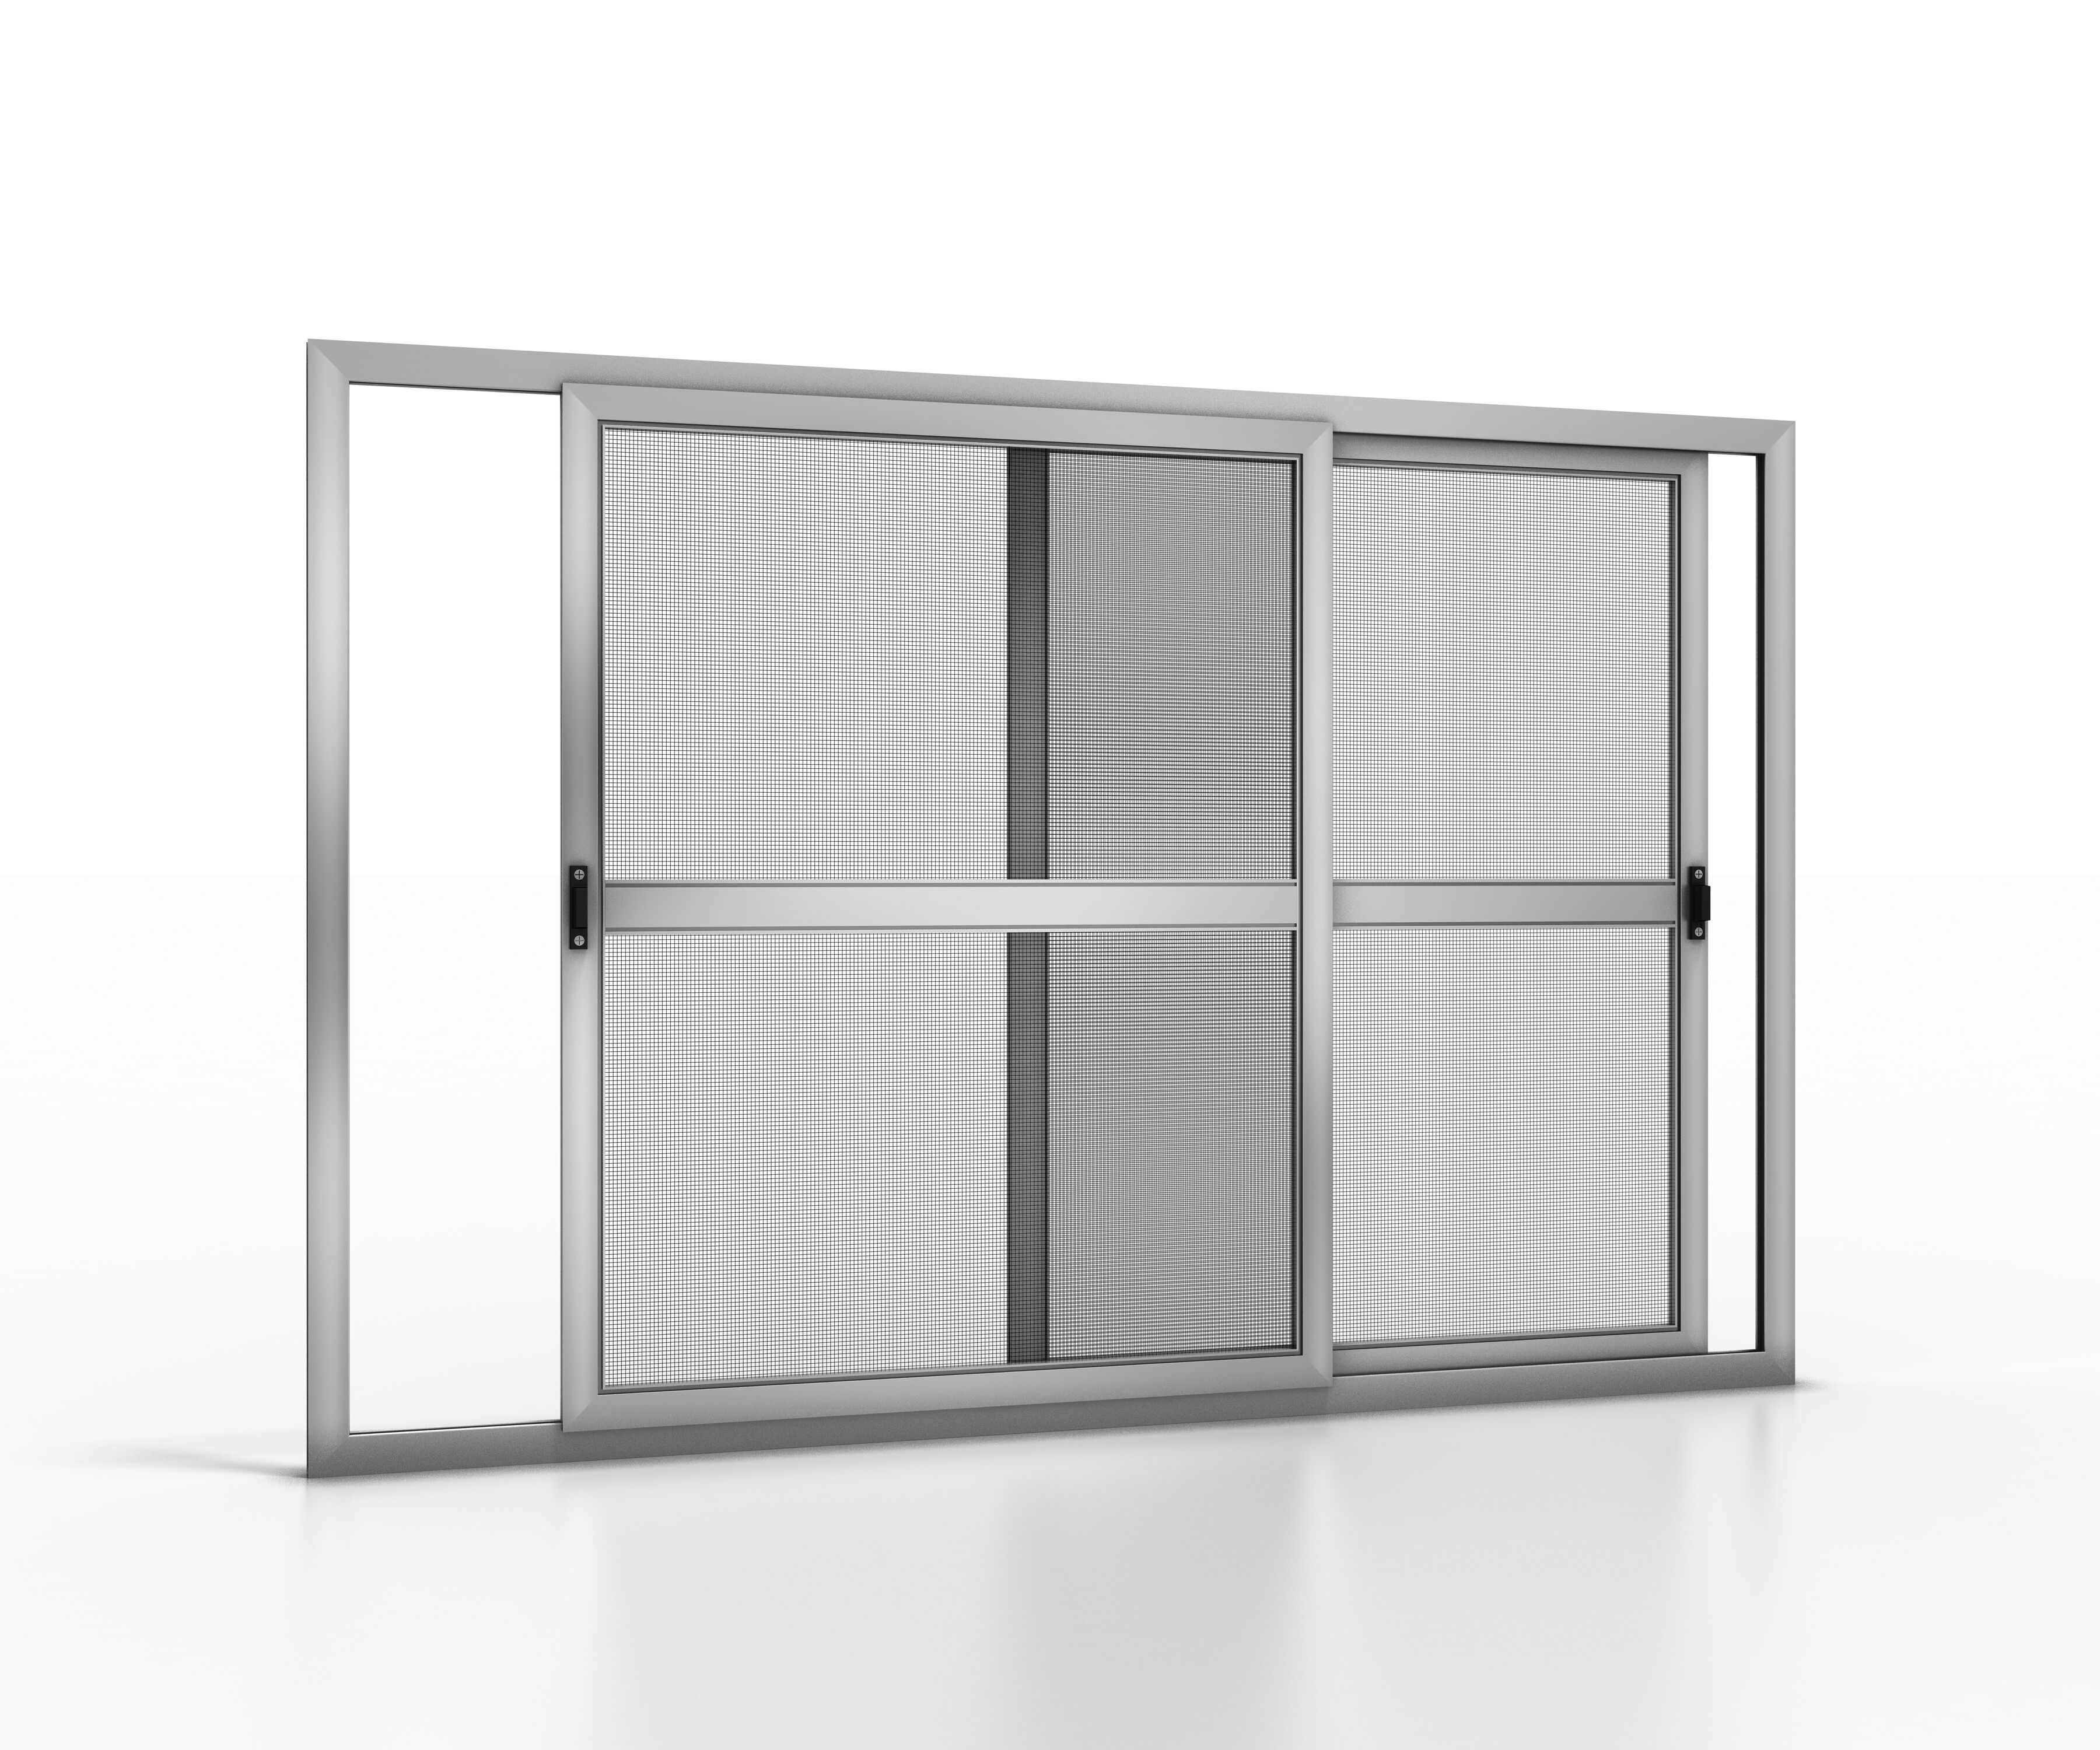 NoFlyStore GOLD.02 sliding fly screen for horizontal panel windows